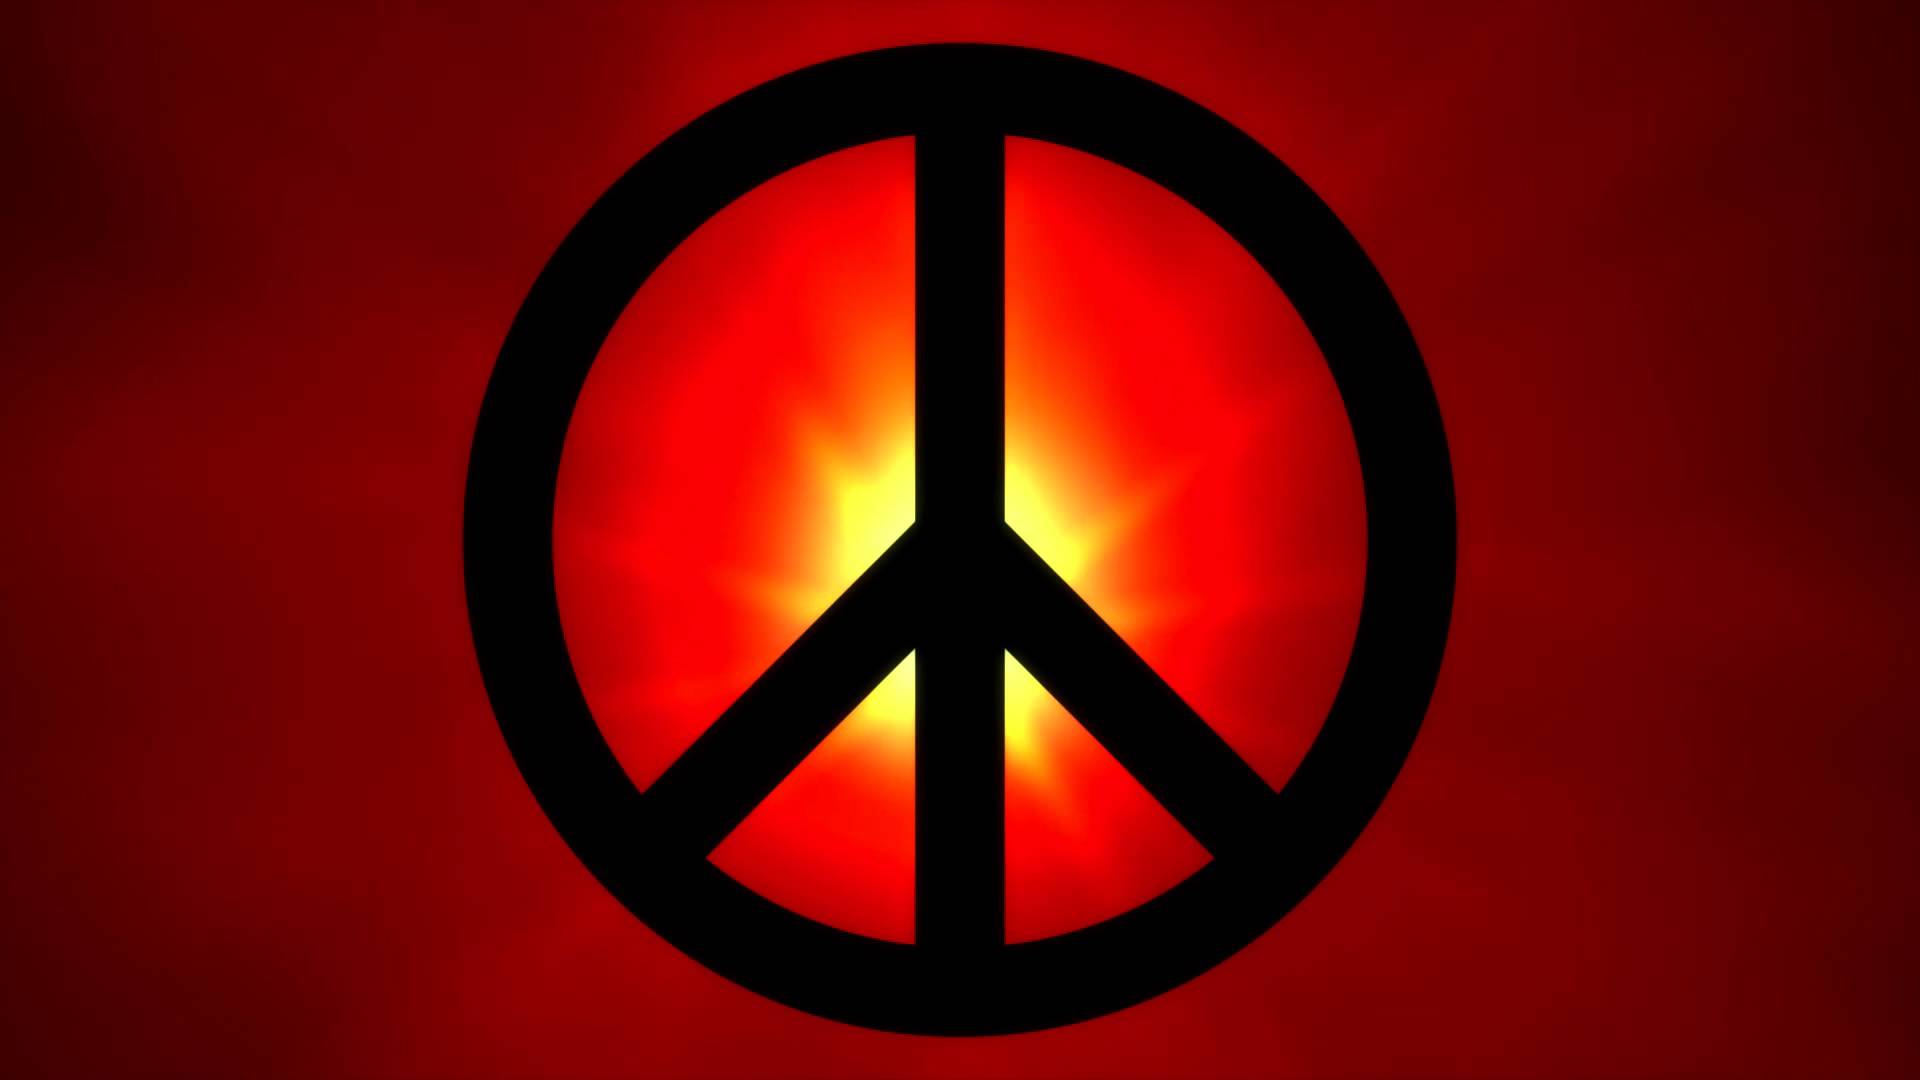 paz fondo de pantalla hd,rojo,naranja,símbolo,símbolos de paz,circulo